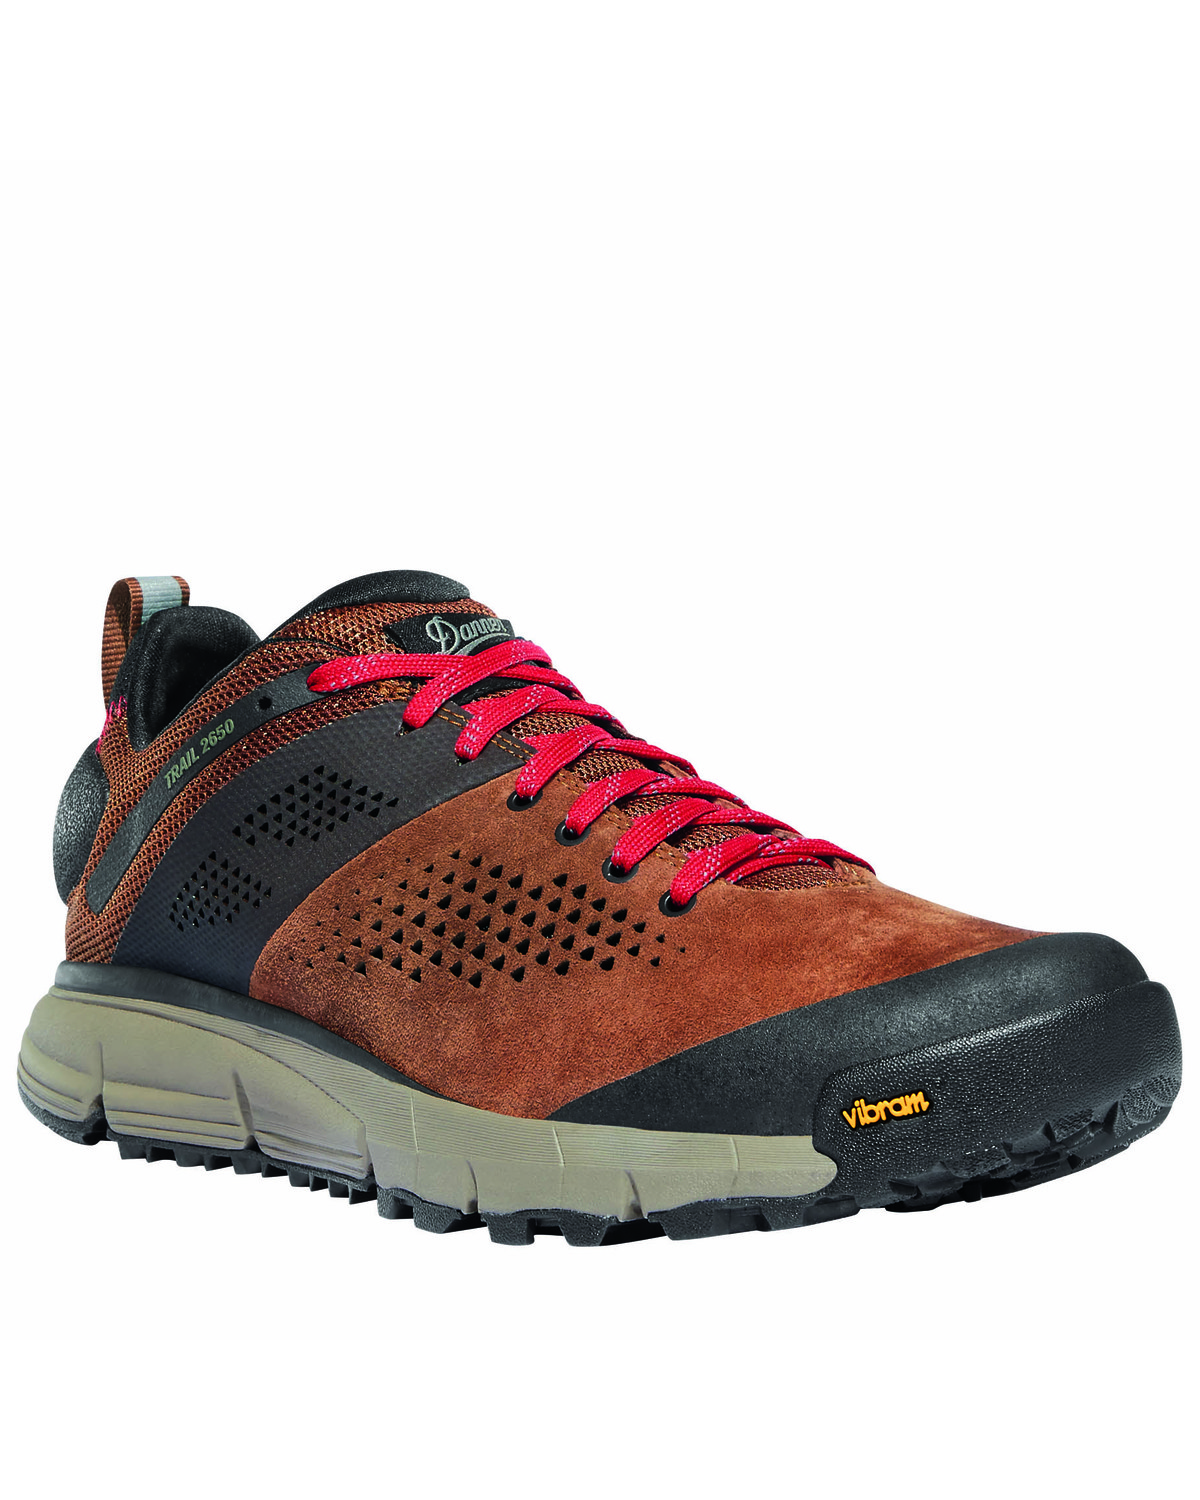 Danner Men's Trail 2650 Hiking Shoes